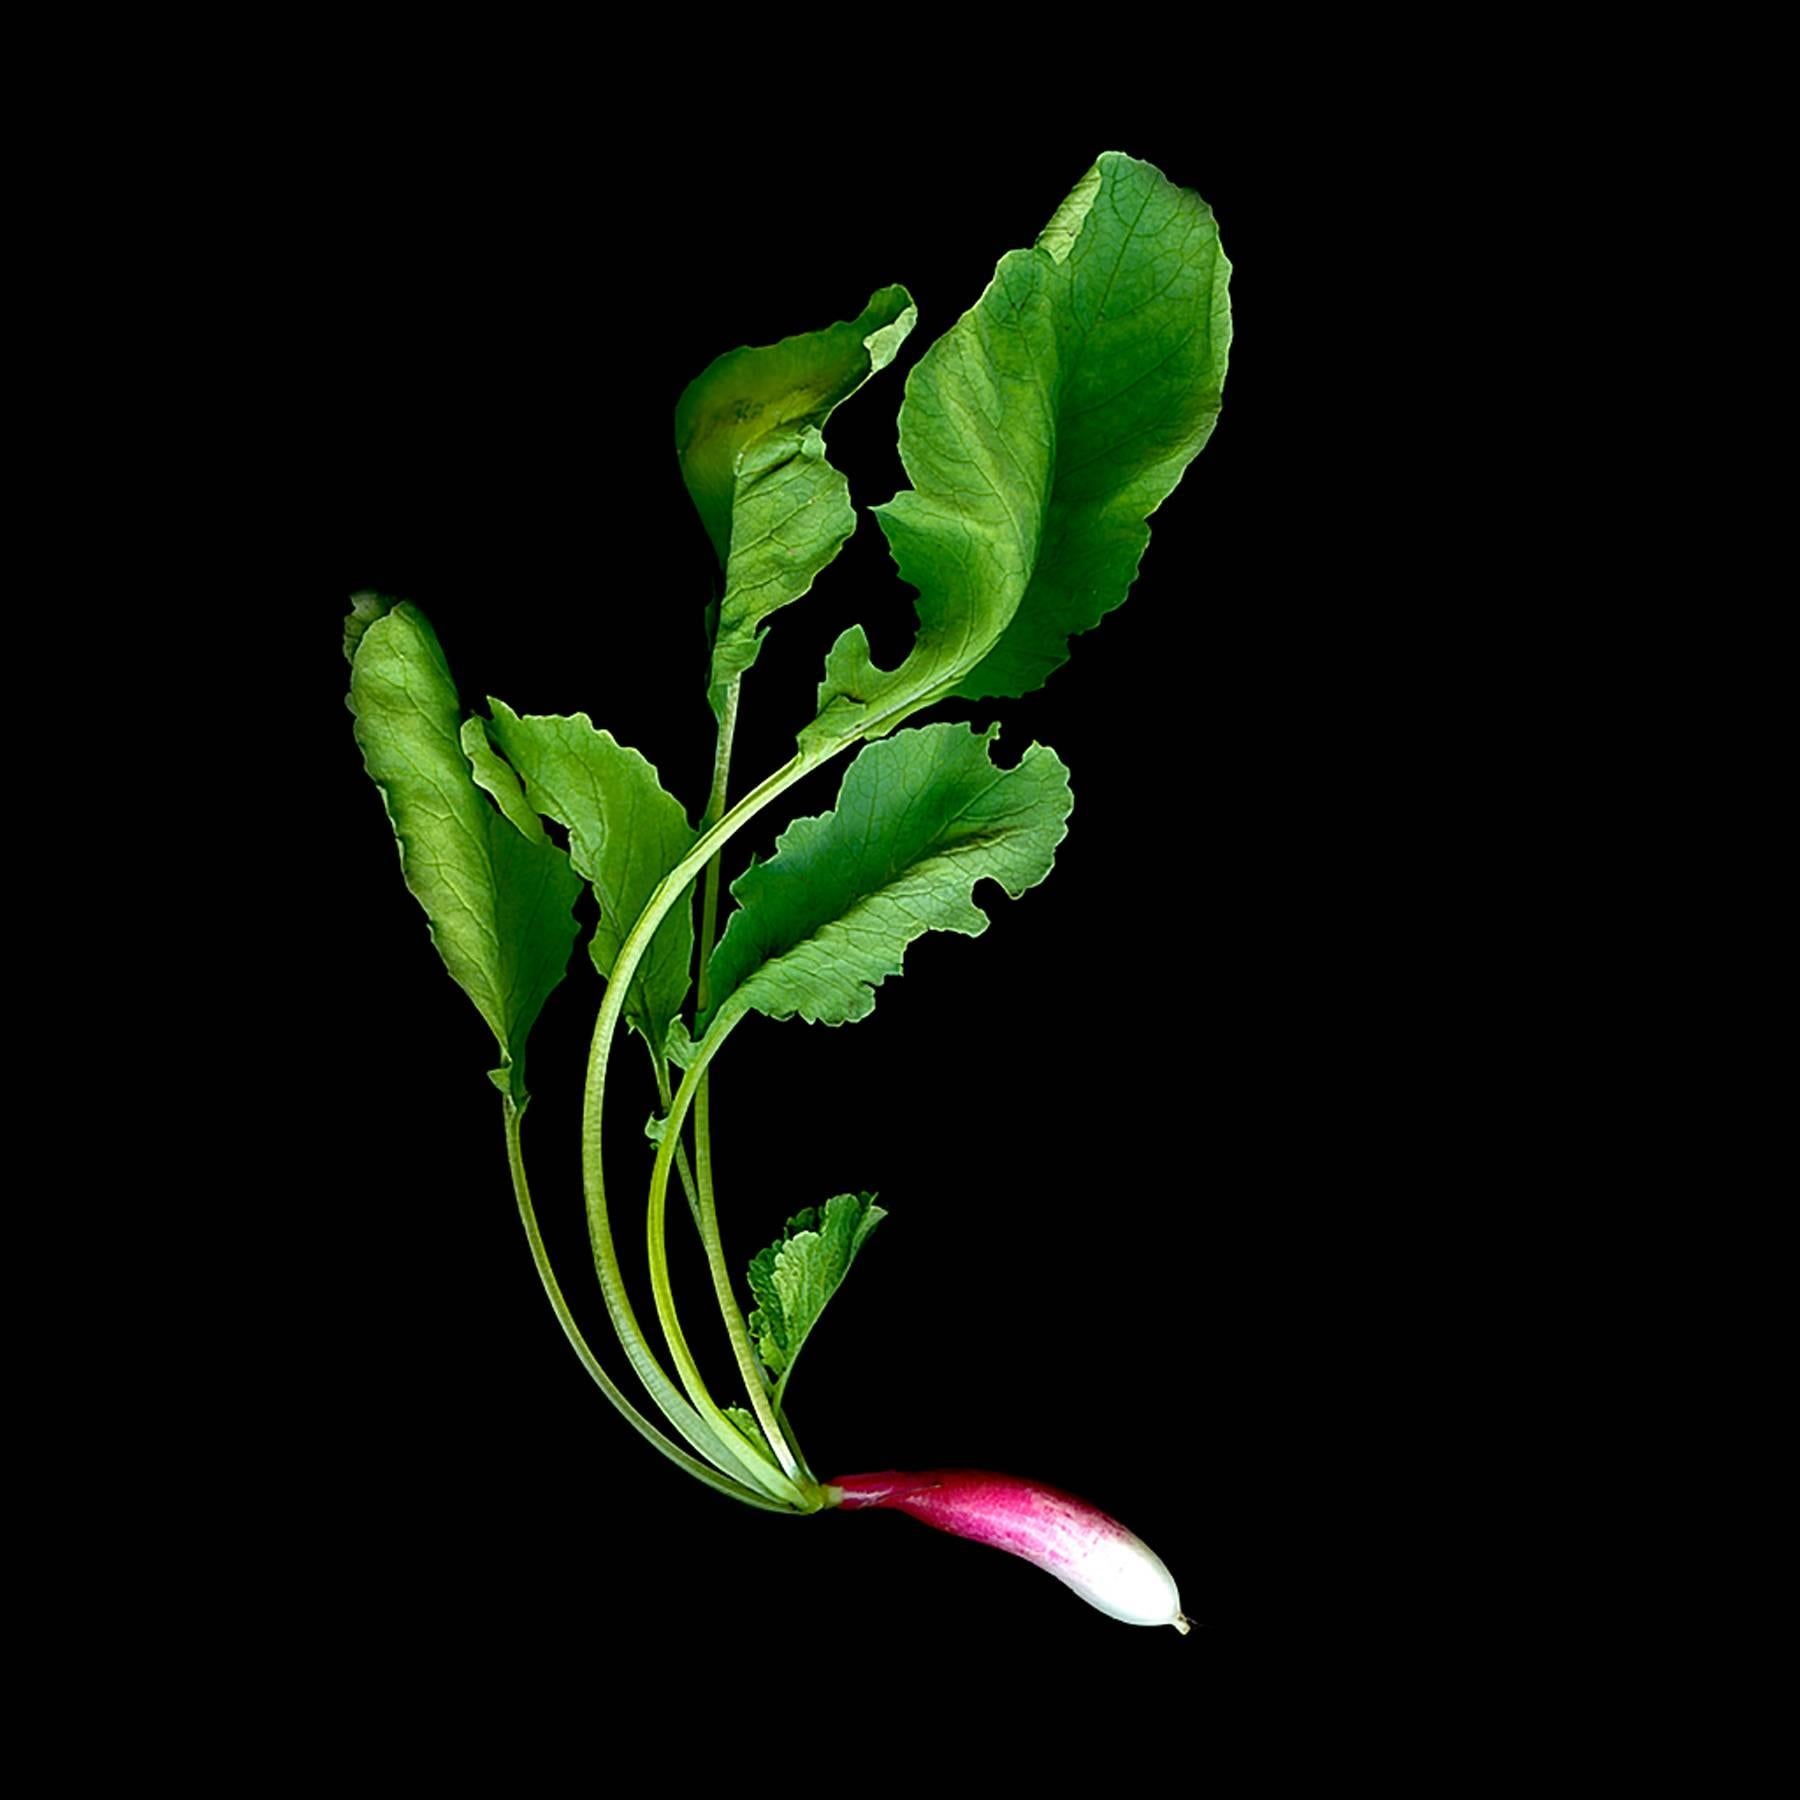 Jerry Freedner Still-Life Photograph - Radish (Vegetable Still Life Photograph, Pink & Green Radish on Black)